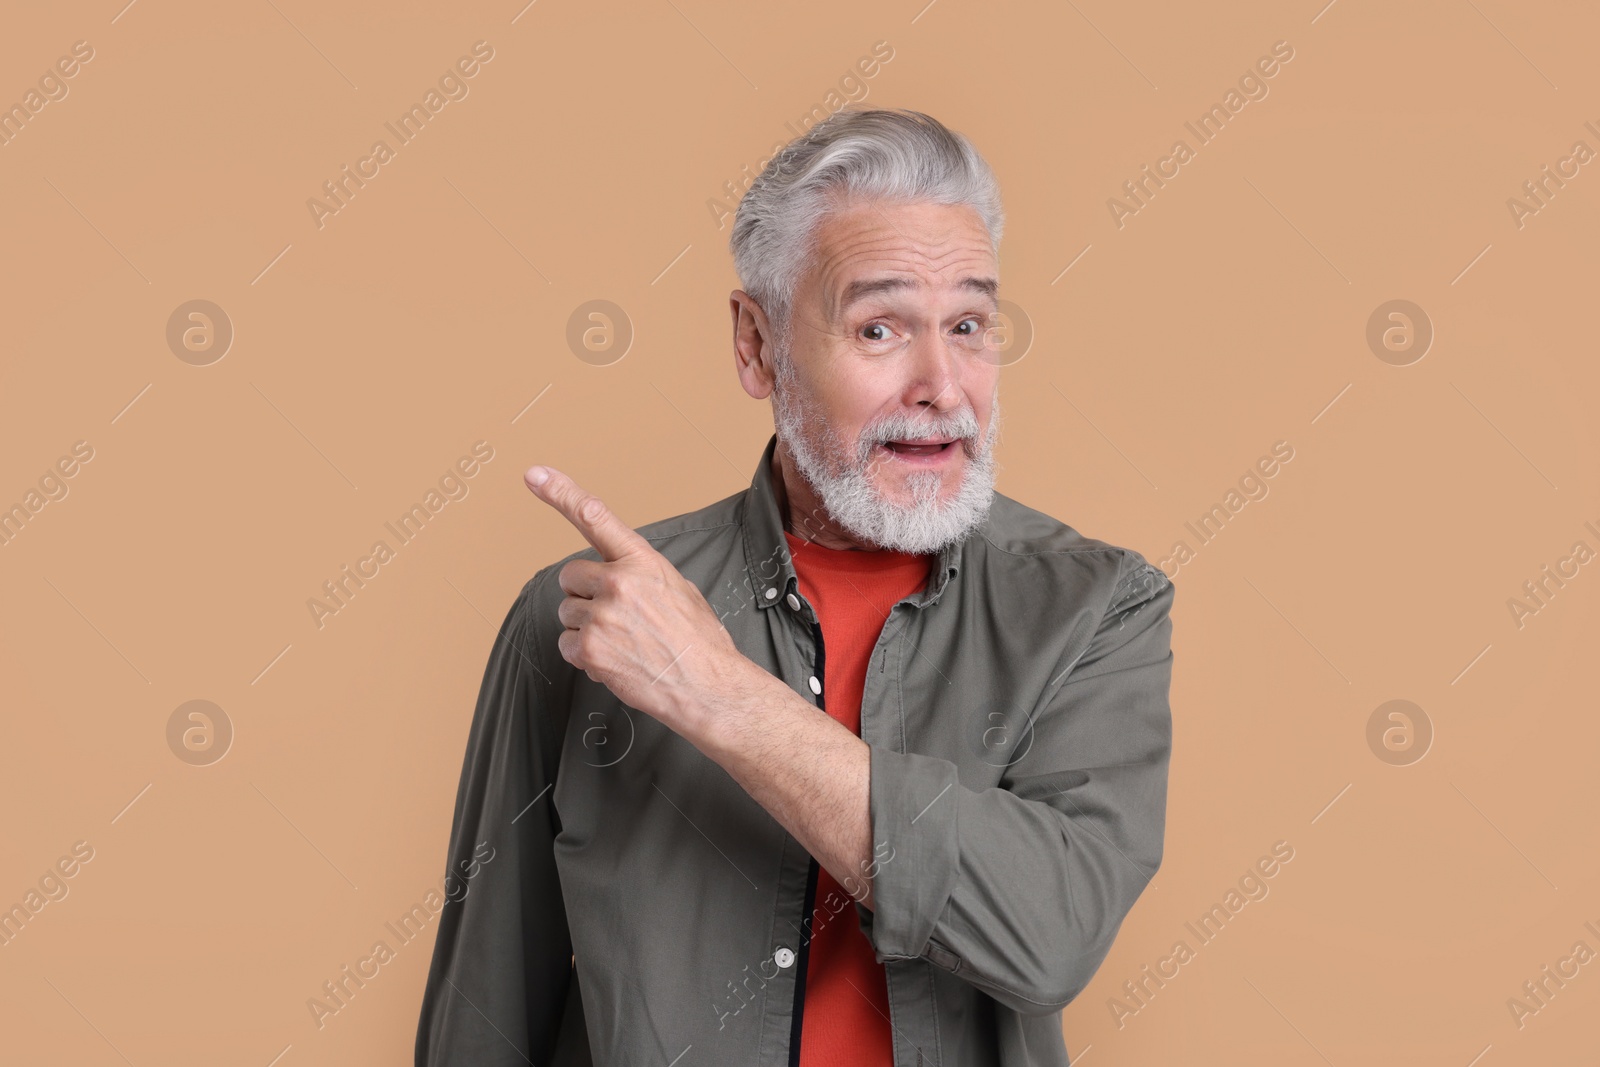 Photo of Surprised senior man pointing at something on beige background